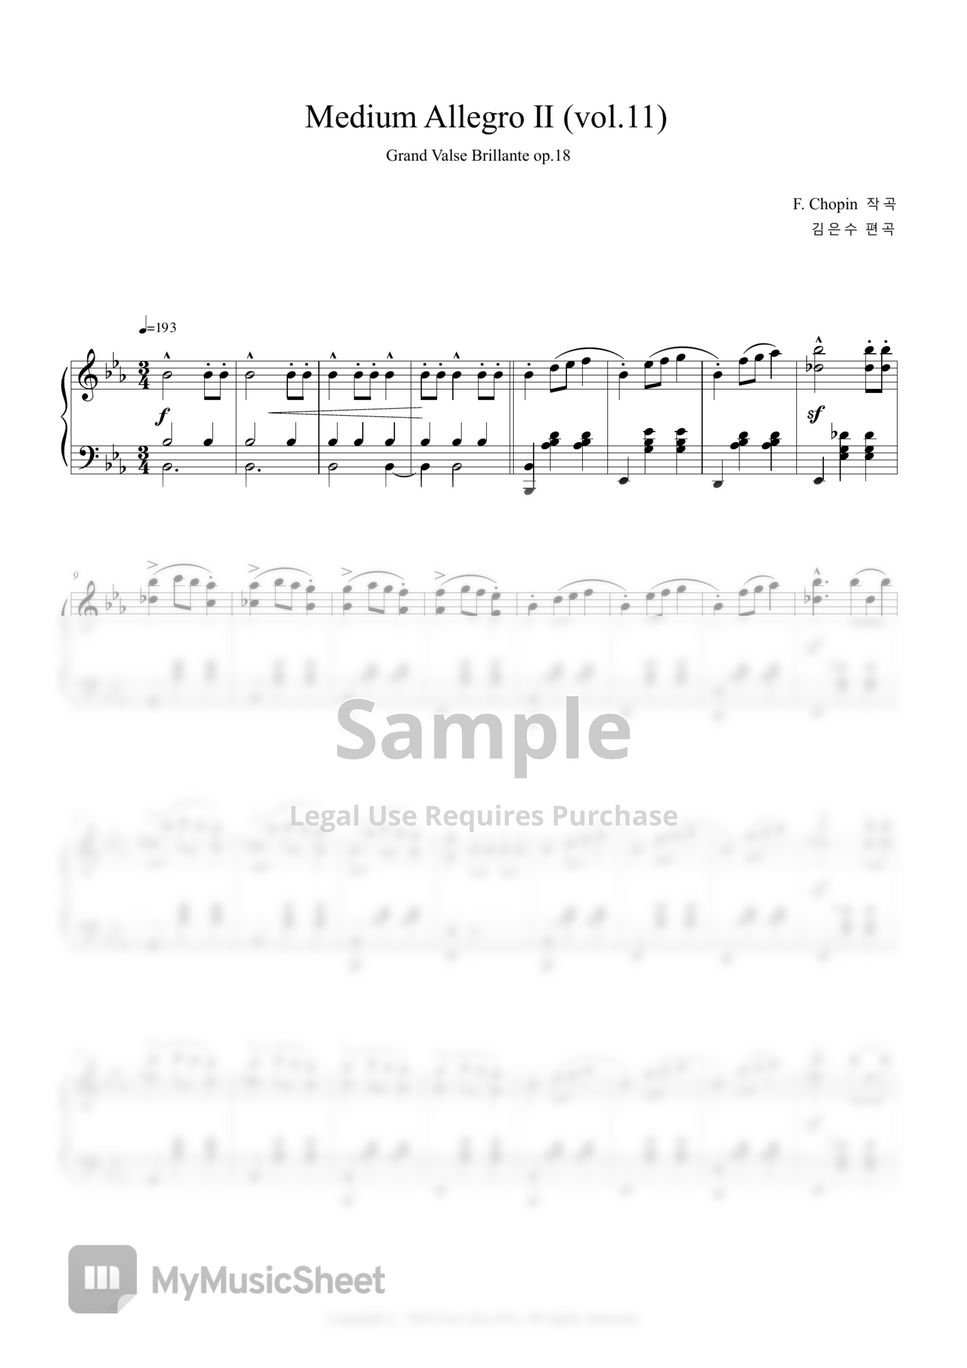 F. Chopin - Medium Allegro Ⅱ (vol.11) by Eun Soo Kim